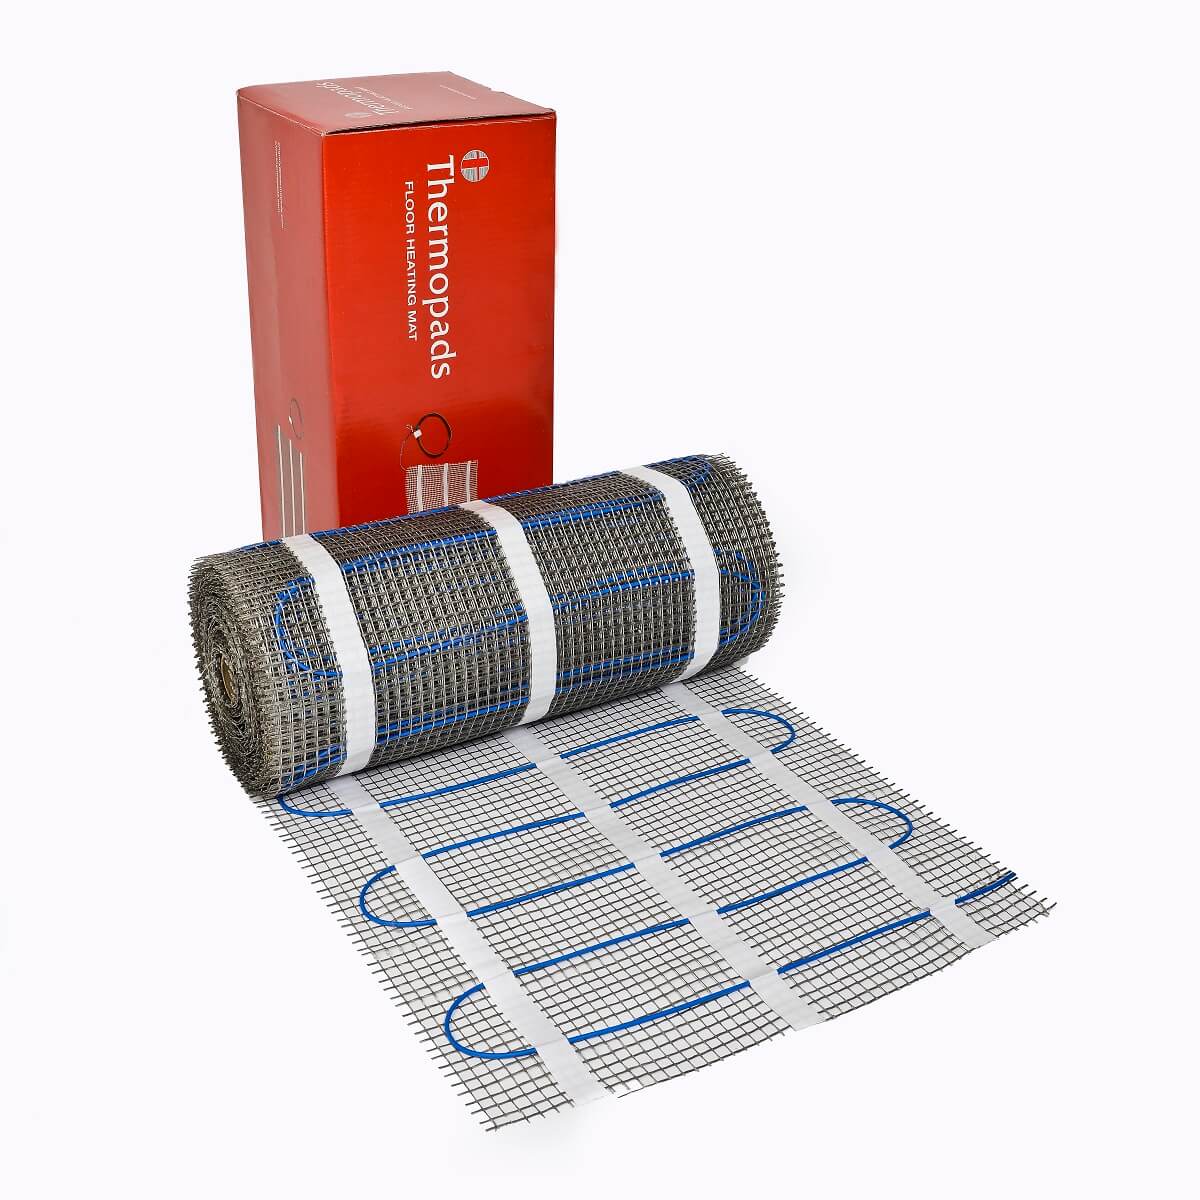 Thermopads Undertile Heating Mat - 3m2 600W (11175)